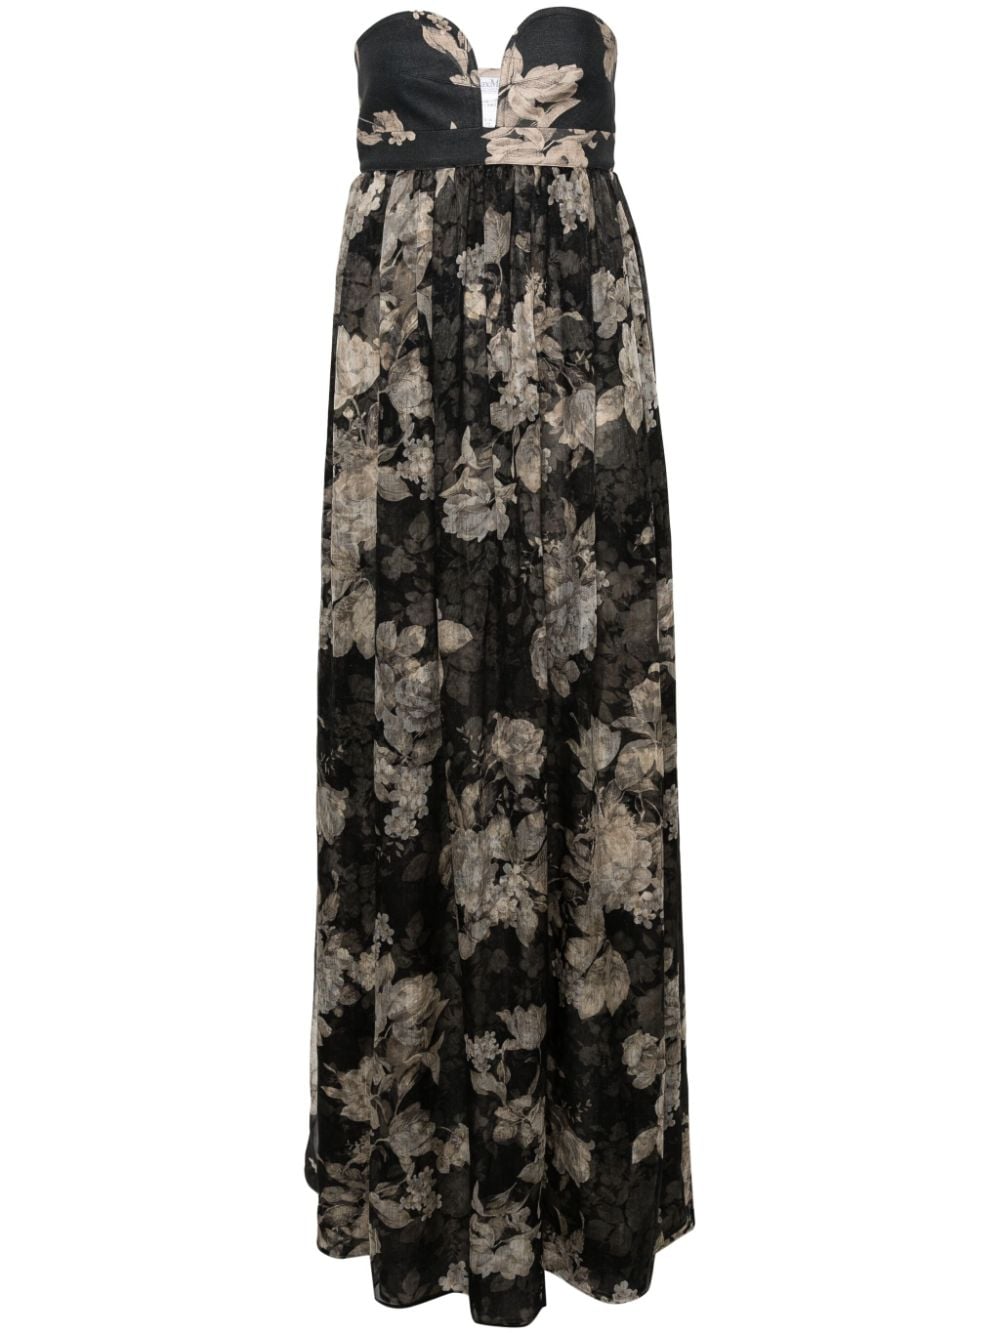 MAX MARA Floral Print Bustier Dress in Black/Beige Silk Cotton for Women